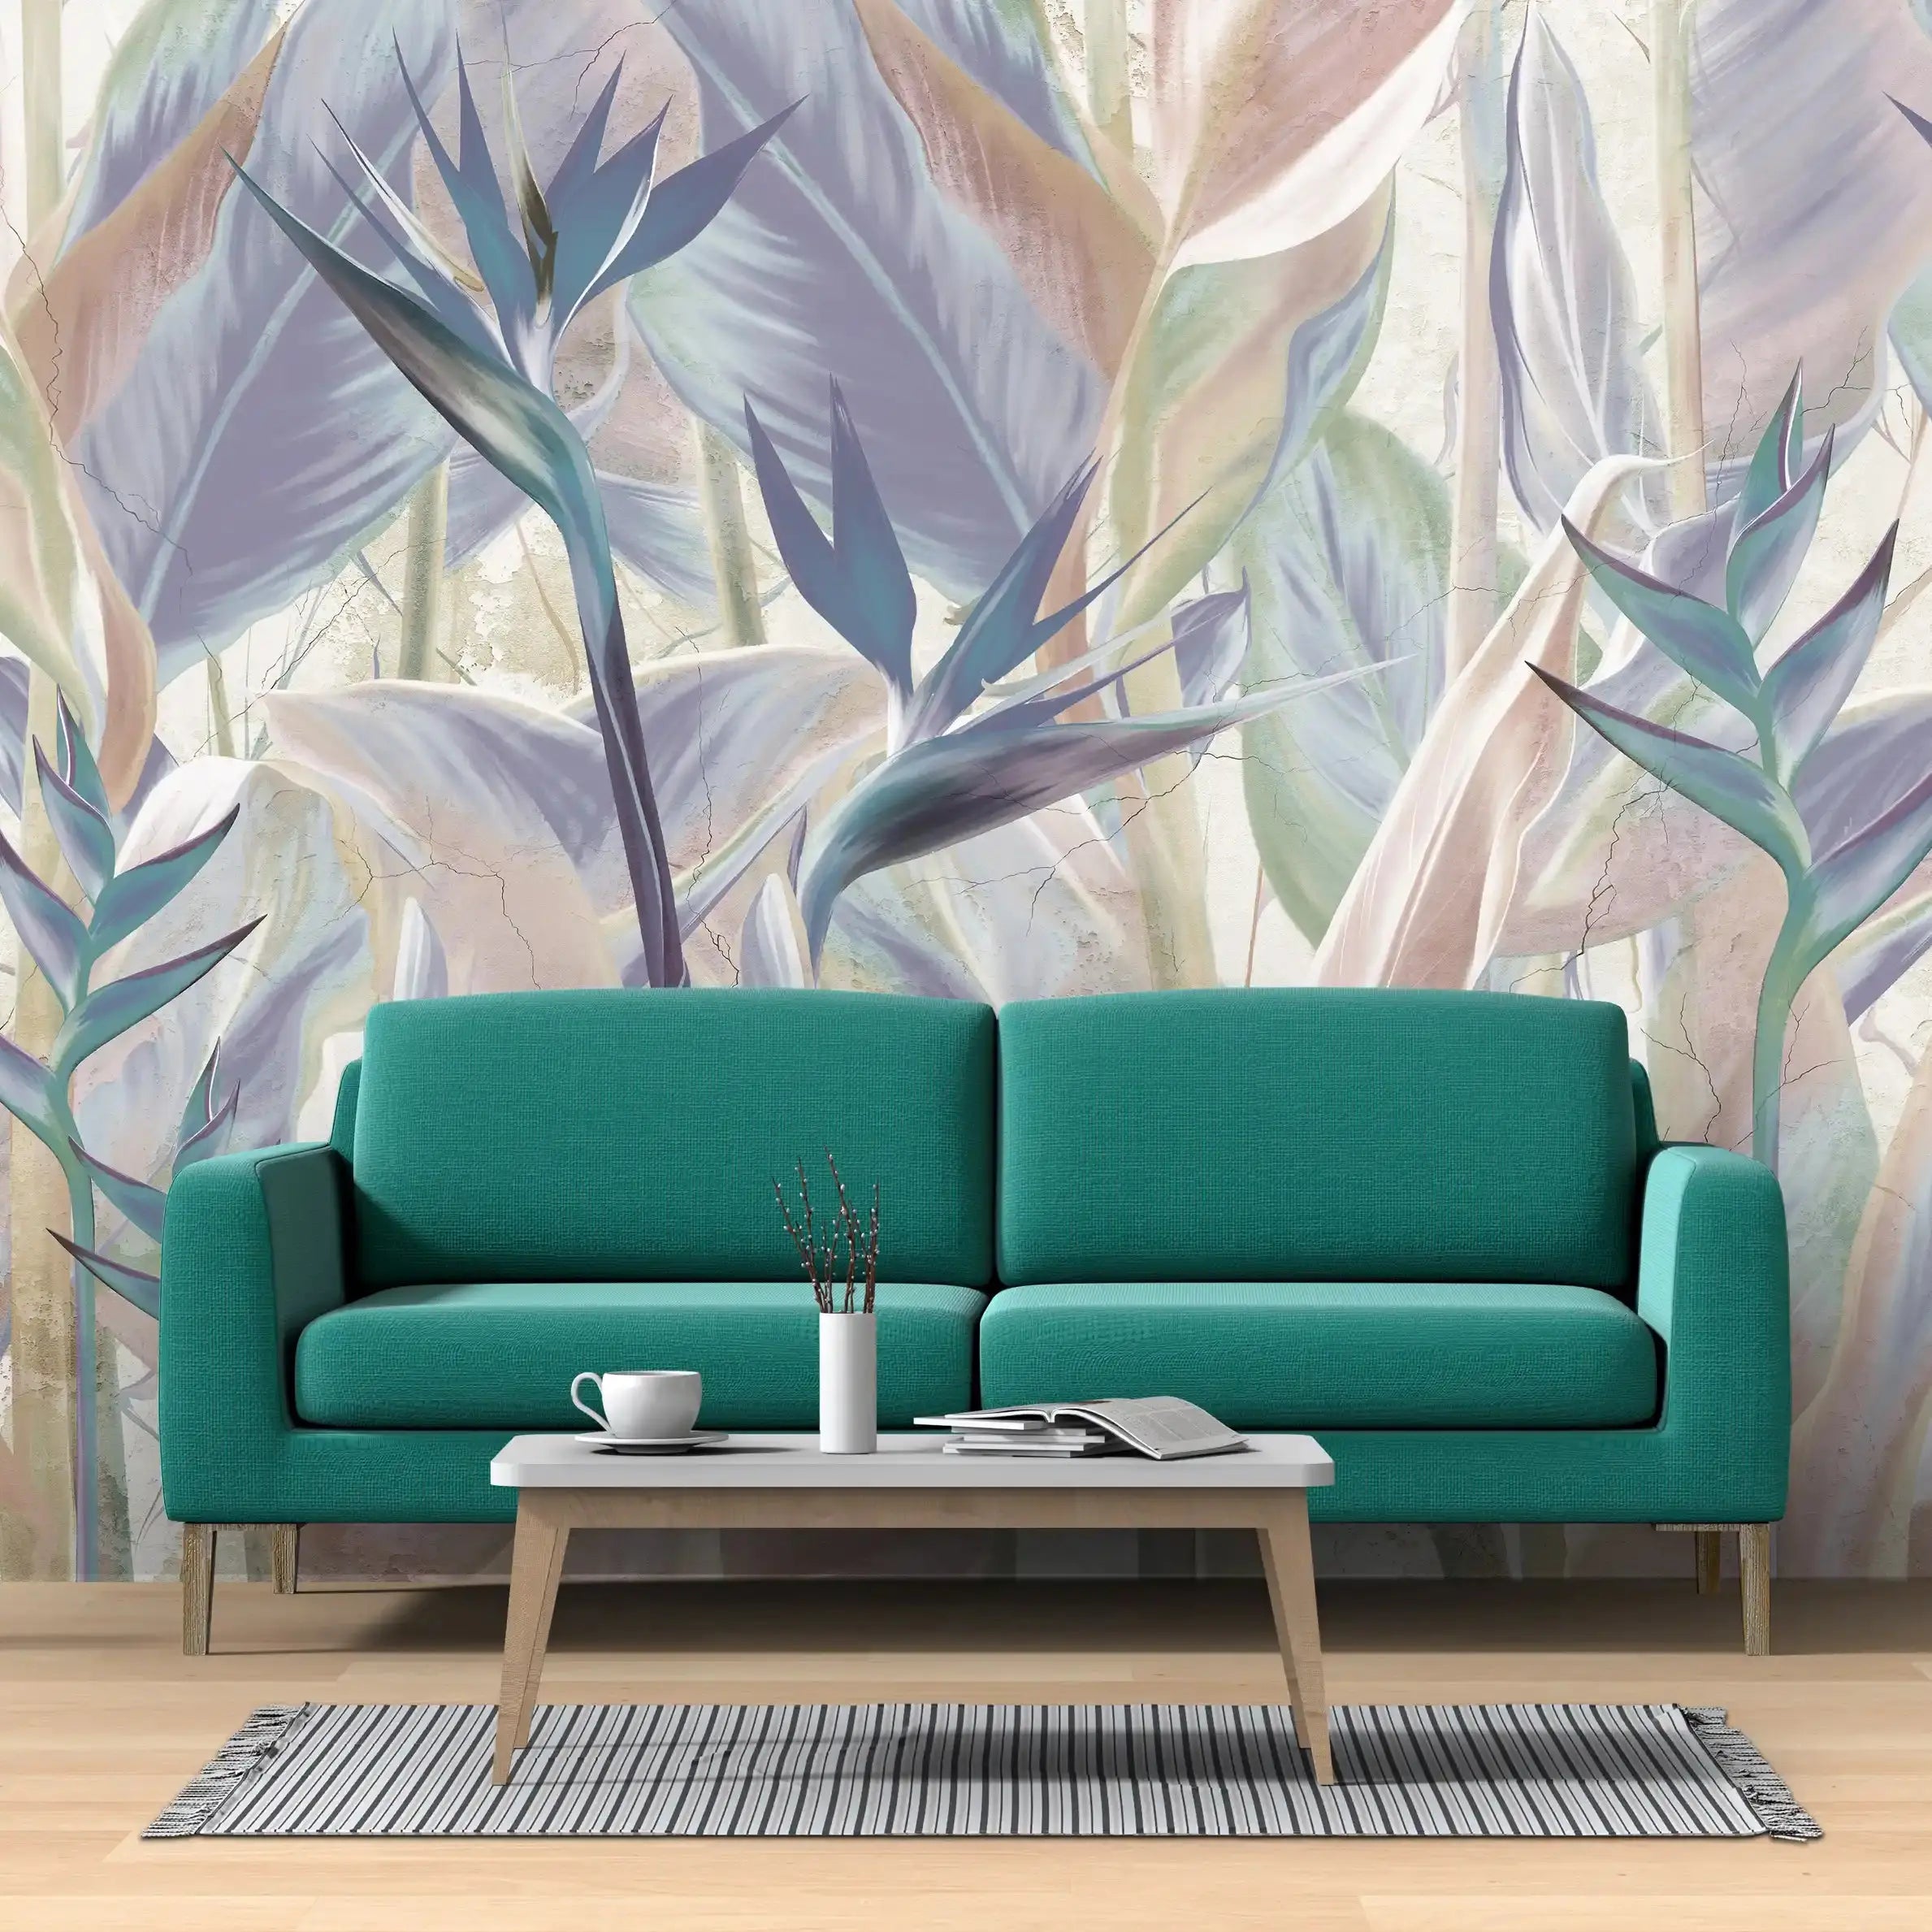 3006-B / Peel and Stick Botanical Wallpaper - Bird of Paradise Design, Easy Install Wall Mural - Artevella